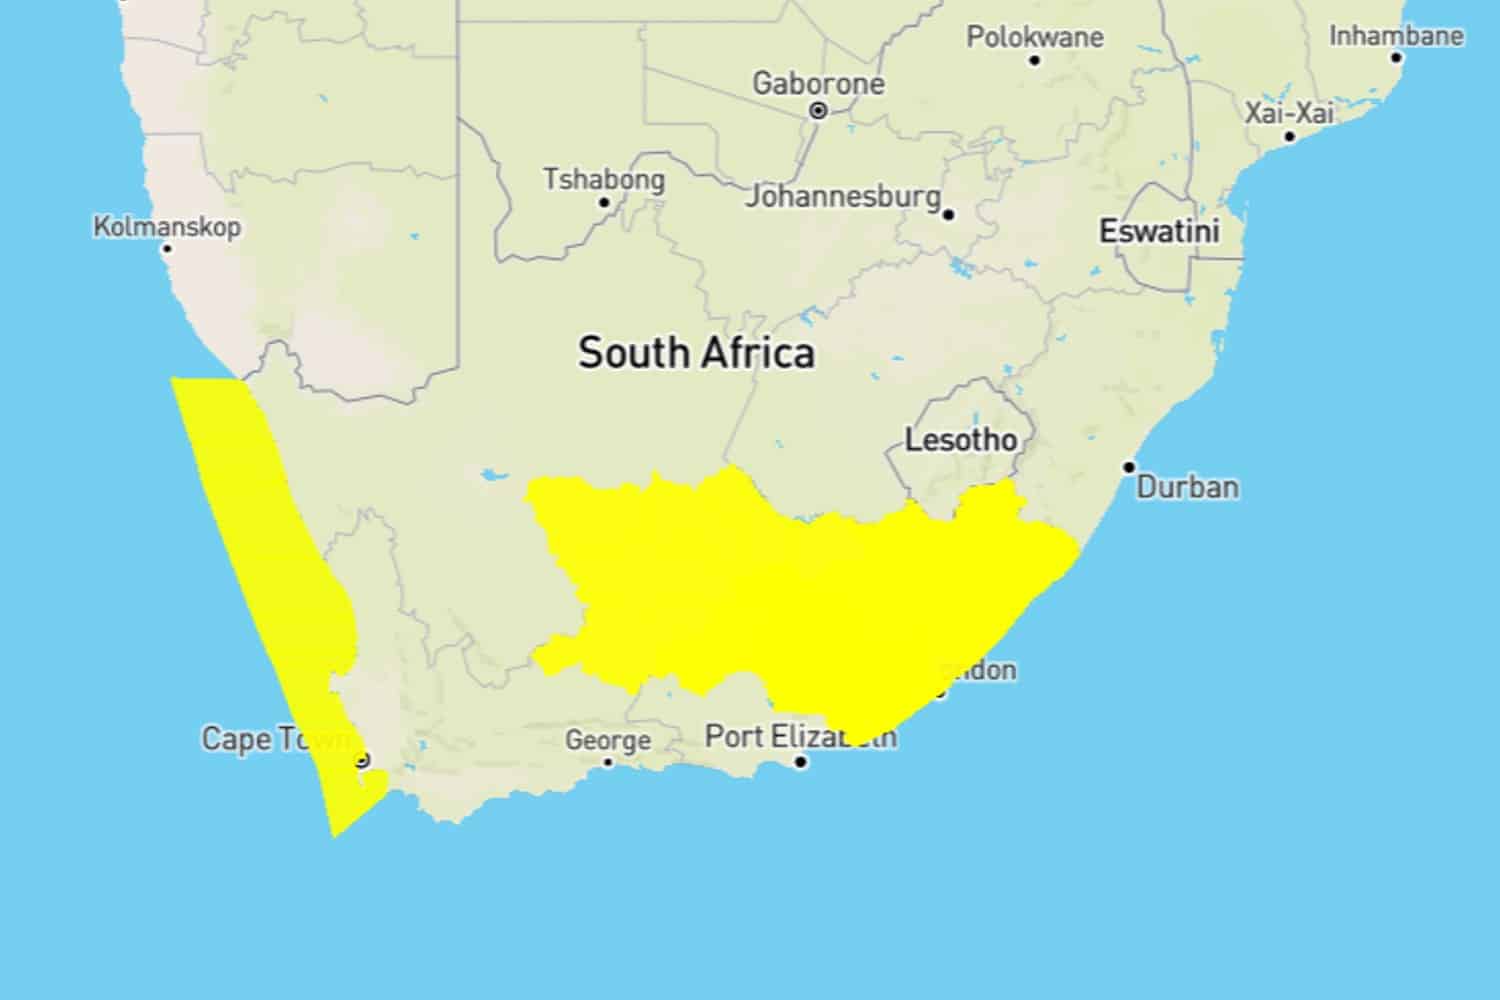 [WEATHER WARNING] Eastern Cape Rain Alert